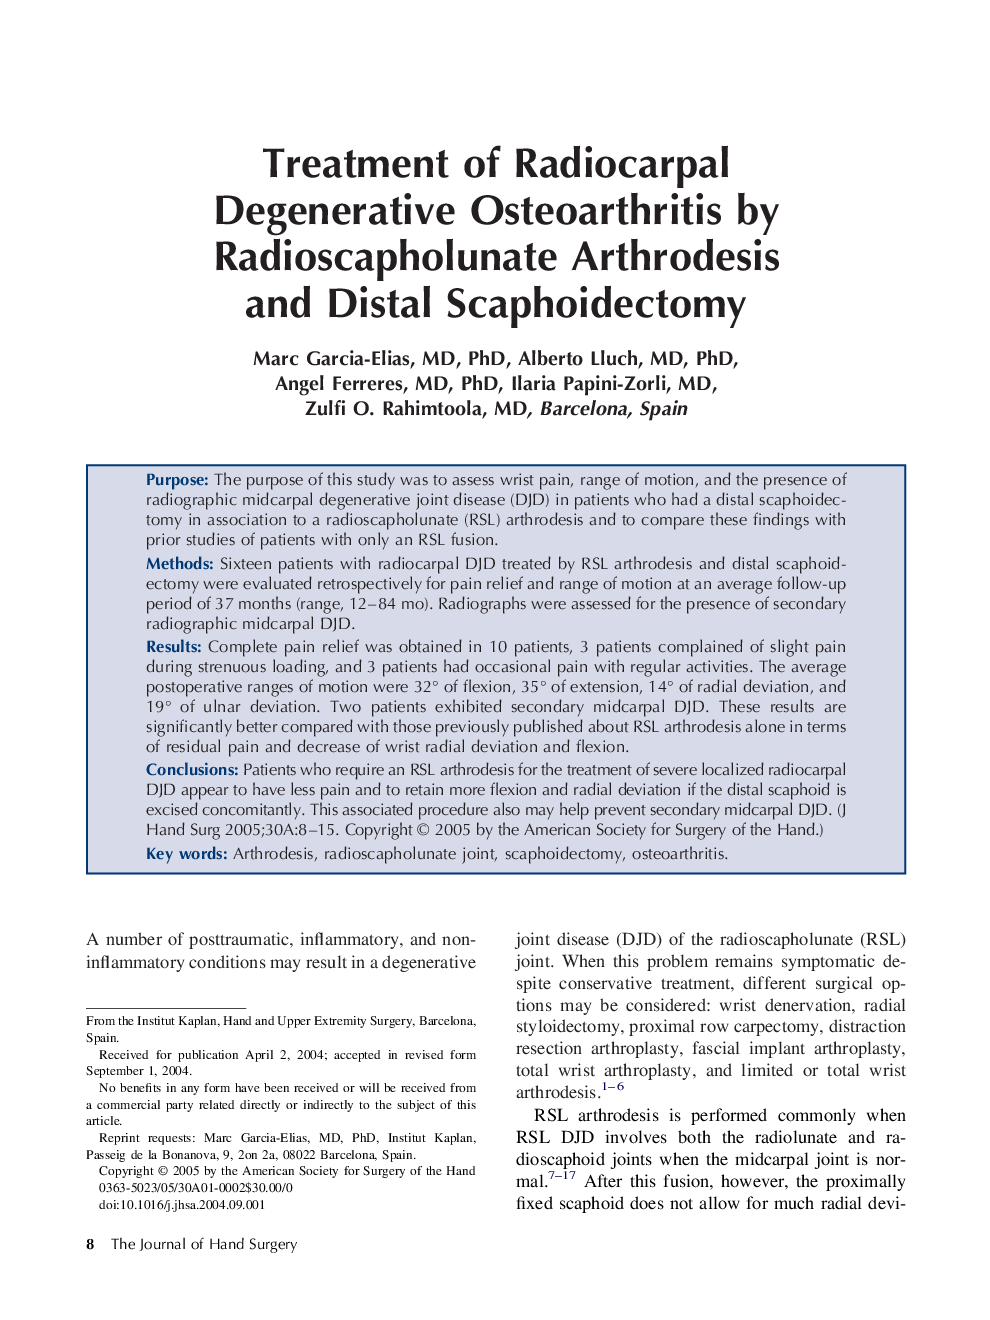 Treatment of radiocarpal degenerative osteoarthritis by radioscapholunate arthrodesis and distal scaphoidectomy